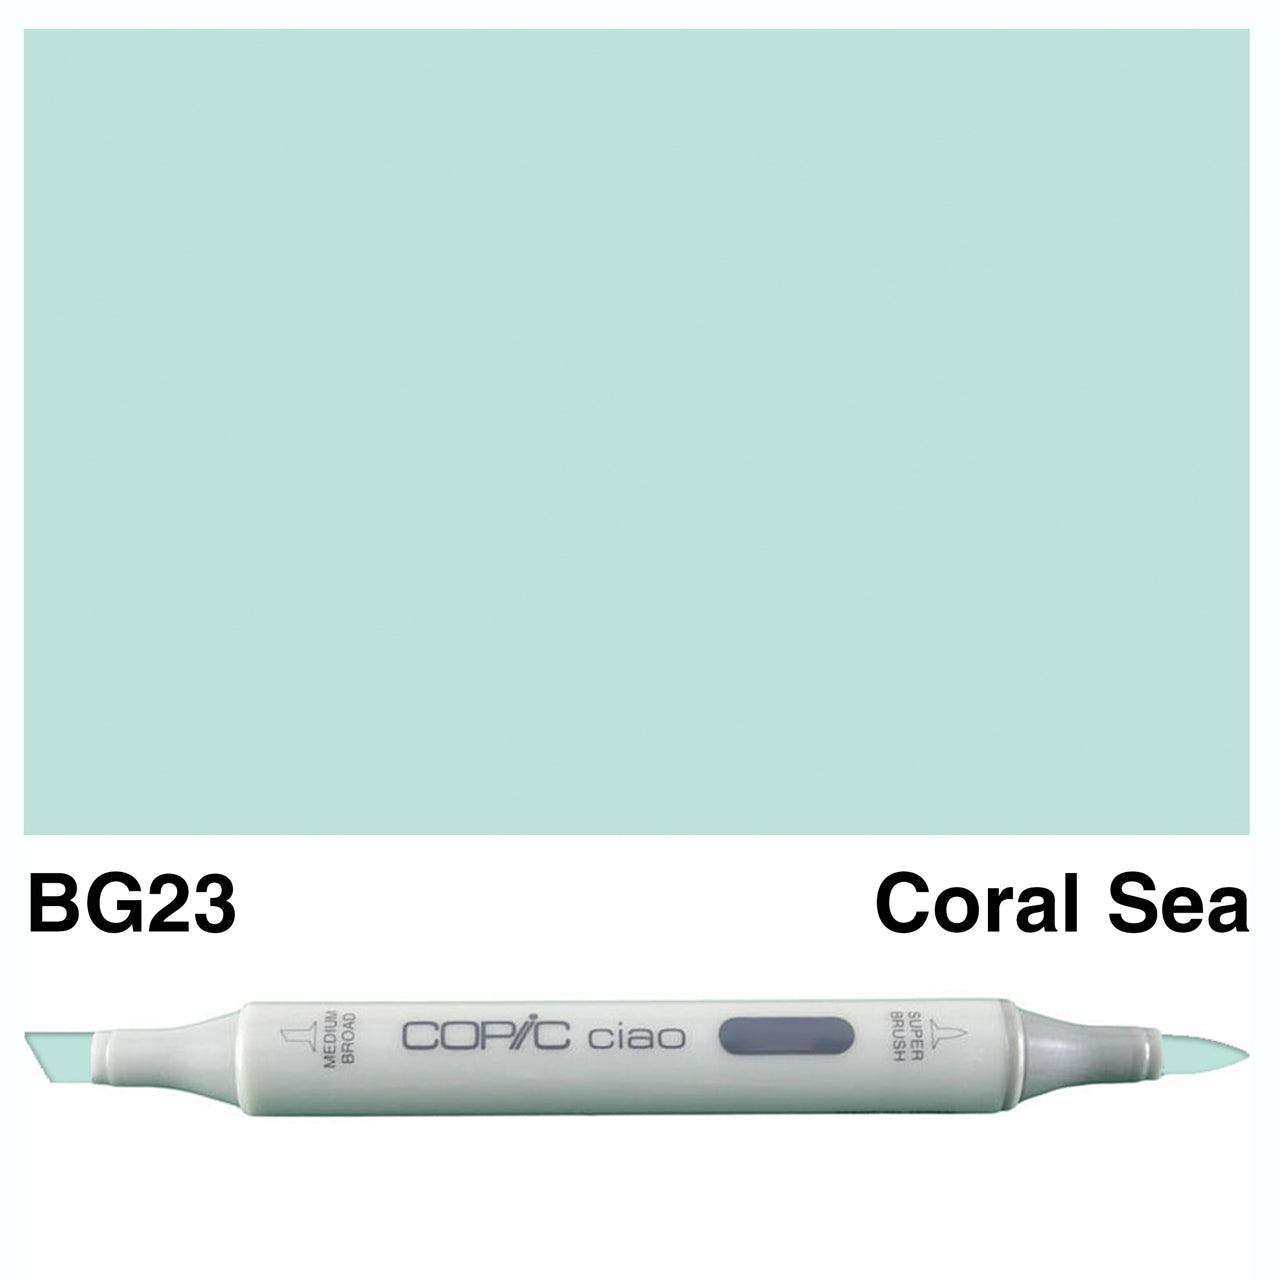 Glitter Brush Marker - Coral 